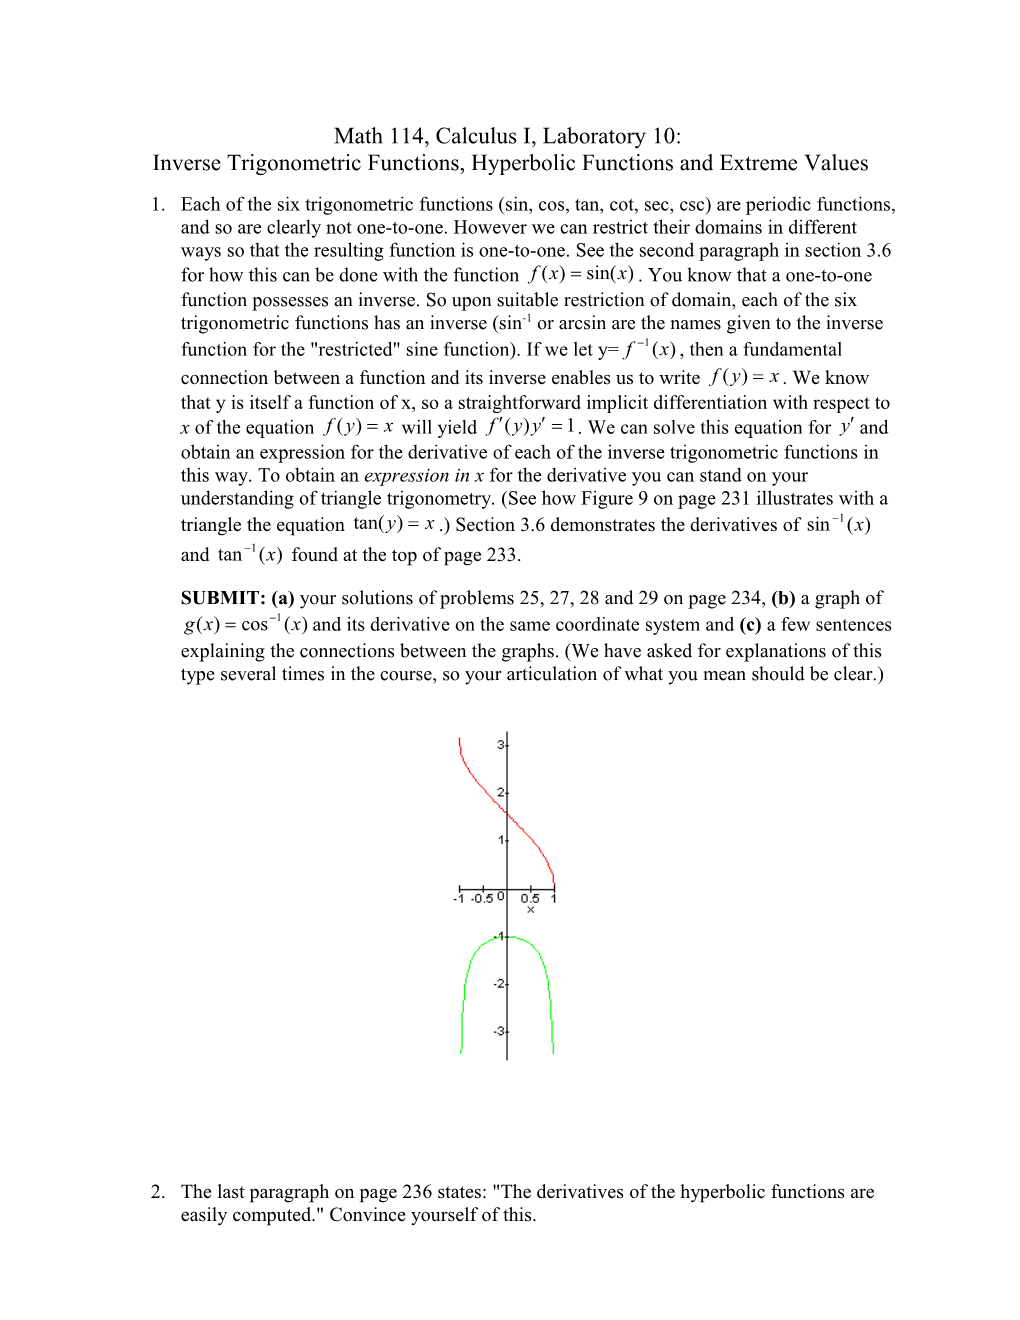 Math 114, Calculus I, Laboratory 10: Inverse Trigonometric Functions, Hyperbolic Functions